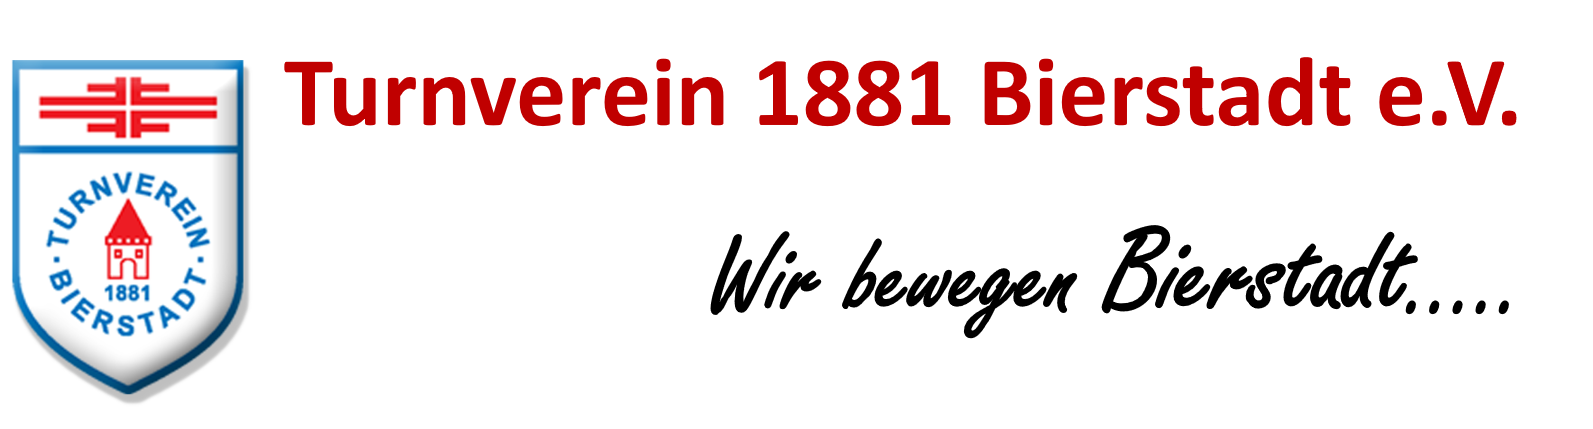 Turnverein Bierstadt e.V.